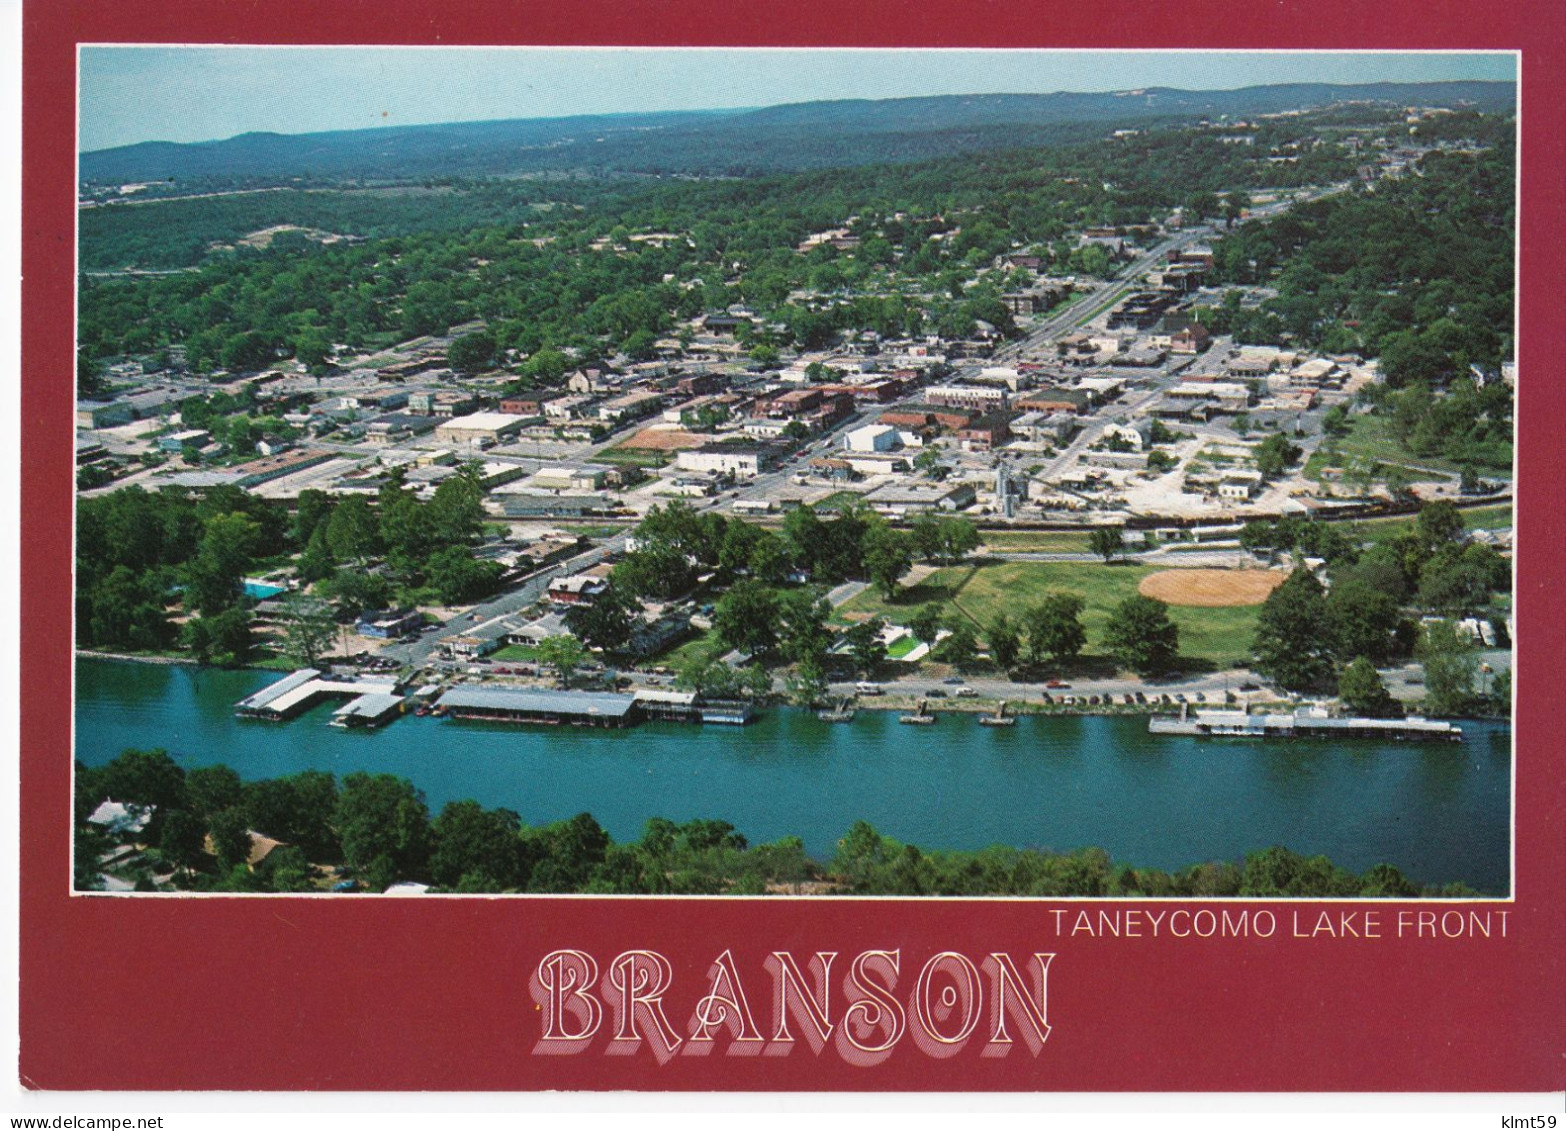 Branson - Taneycomo Lake Front - Branson